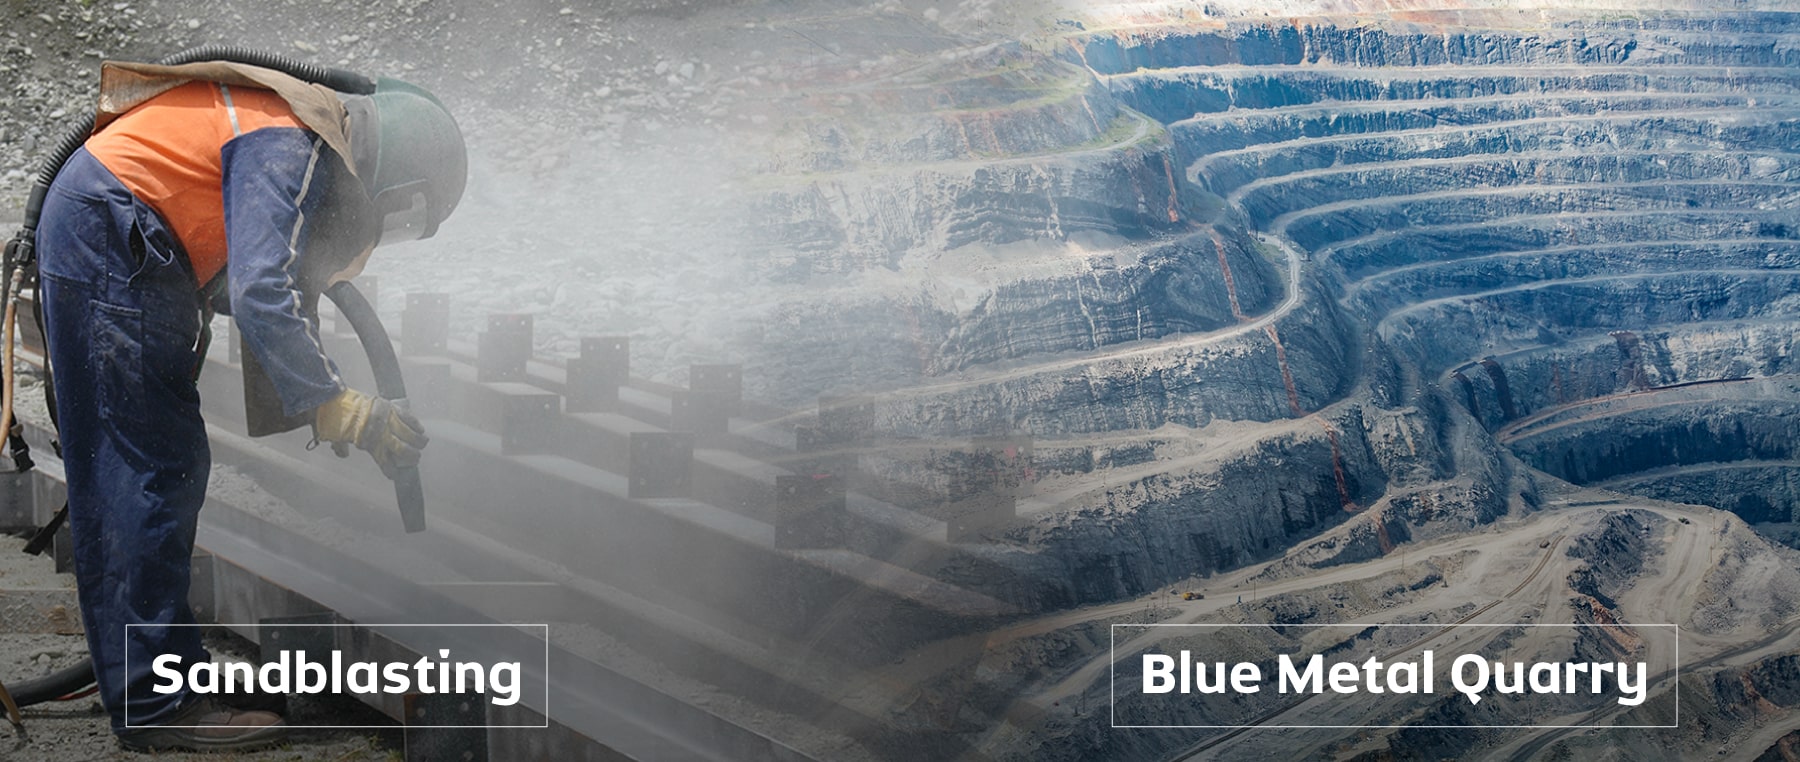 Sandblasting - Blue metal quarry